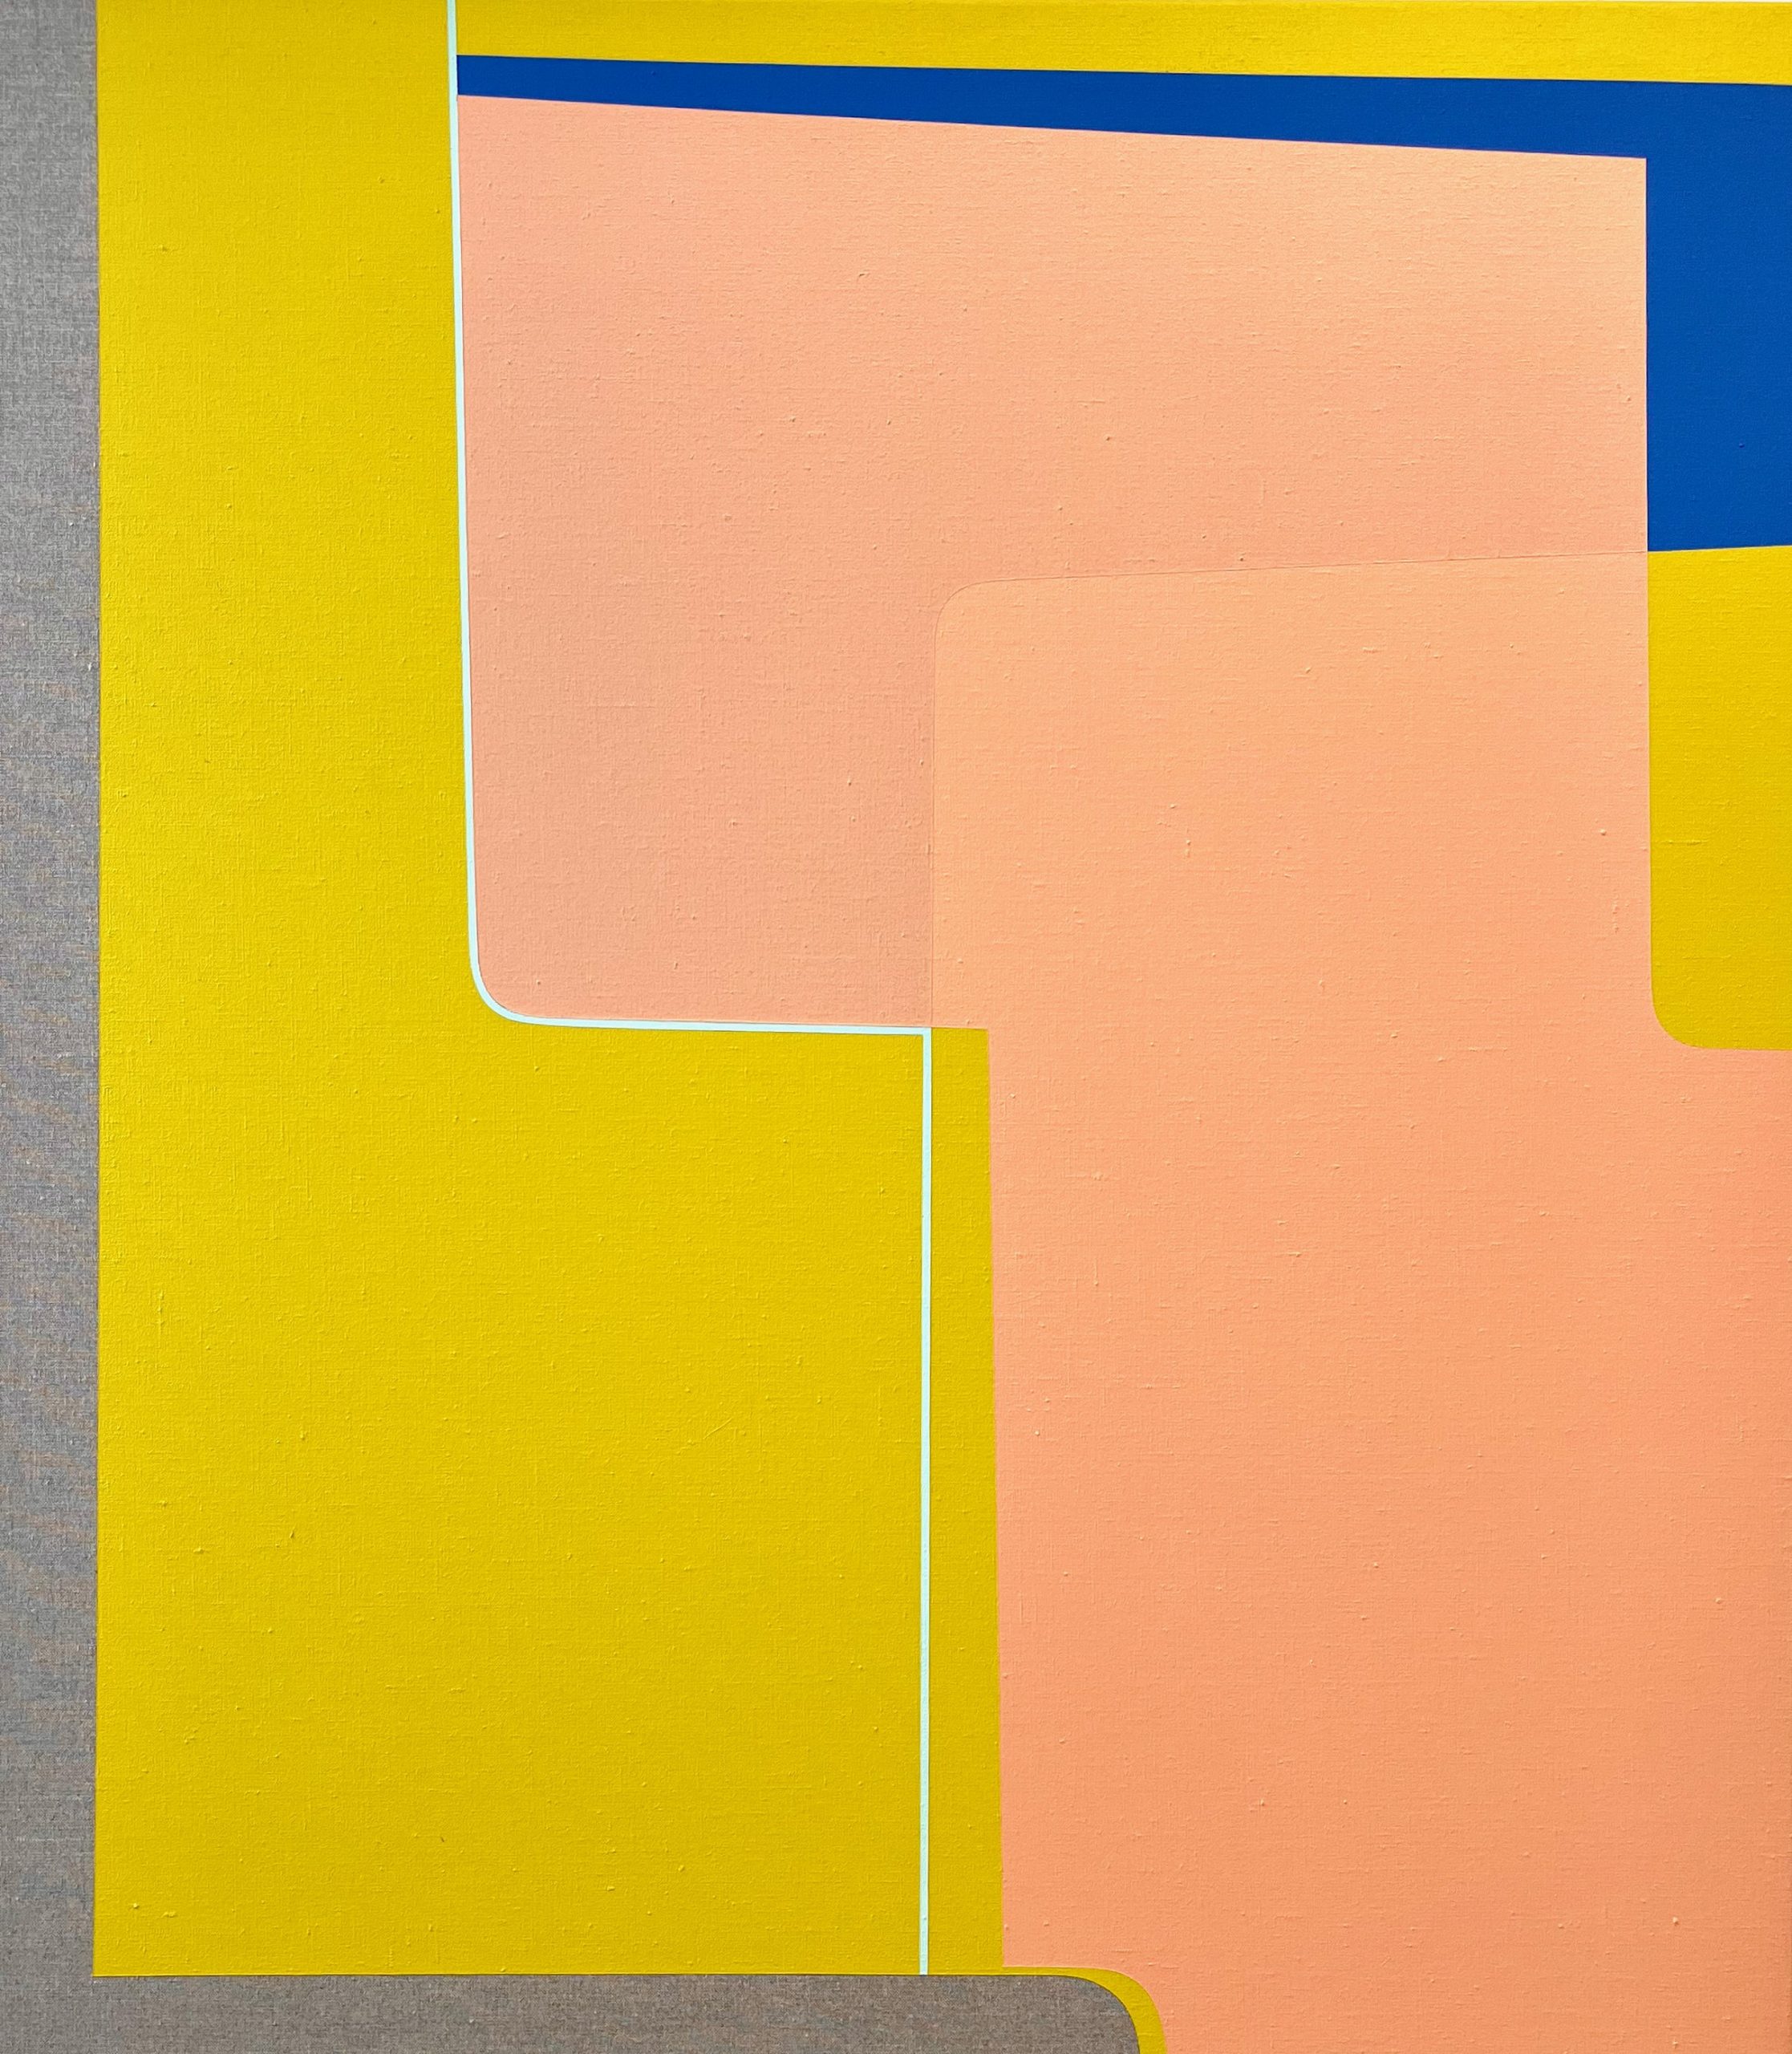 Matthew Browne 'Taise' vinyl tempera and oil on linen 86 x 76cm $9,000